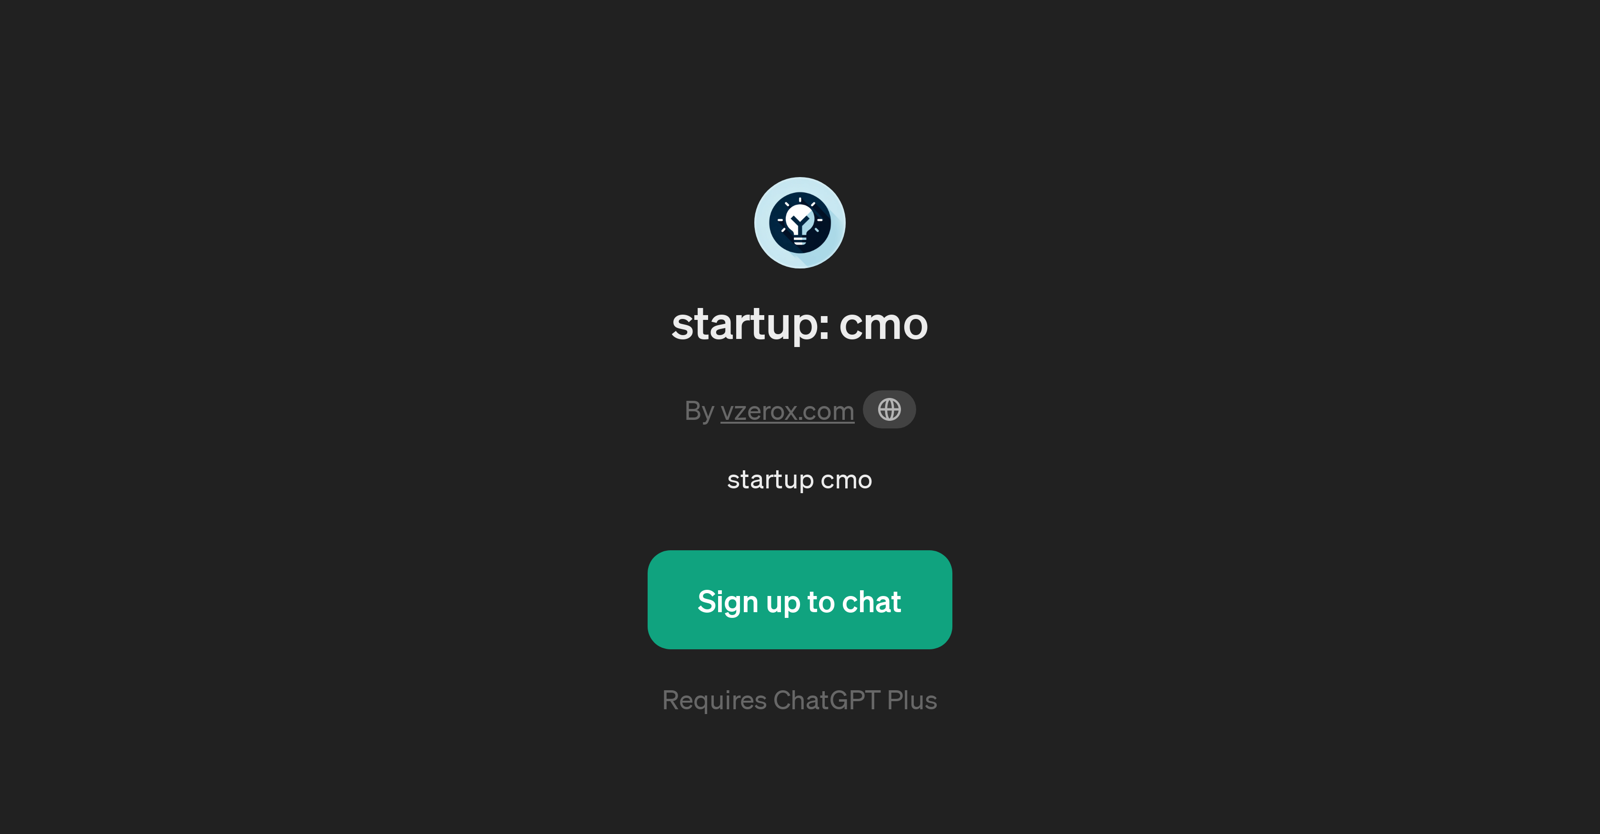 startup: cmo website